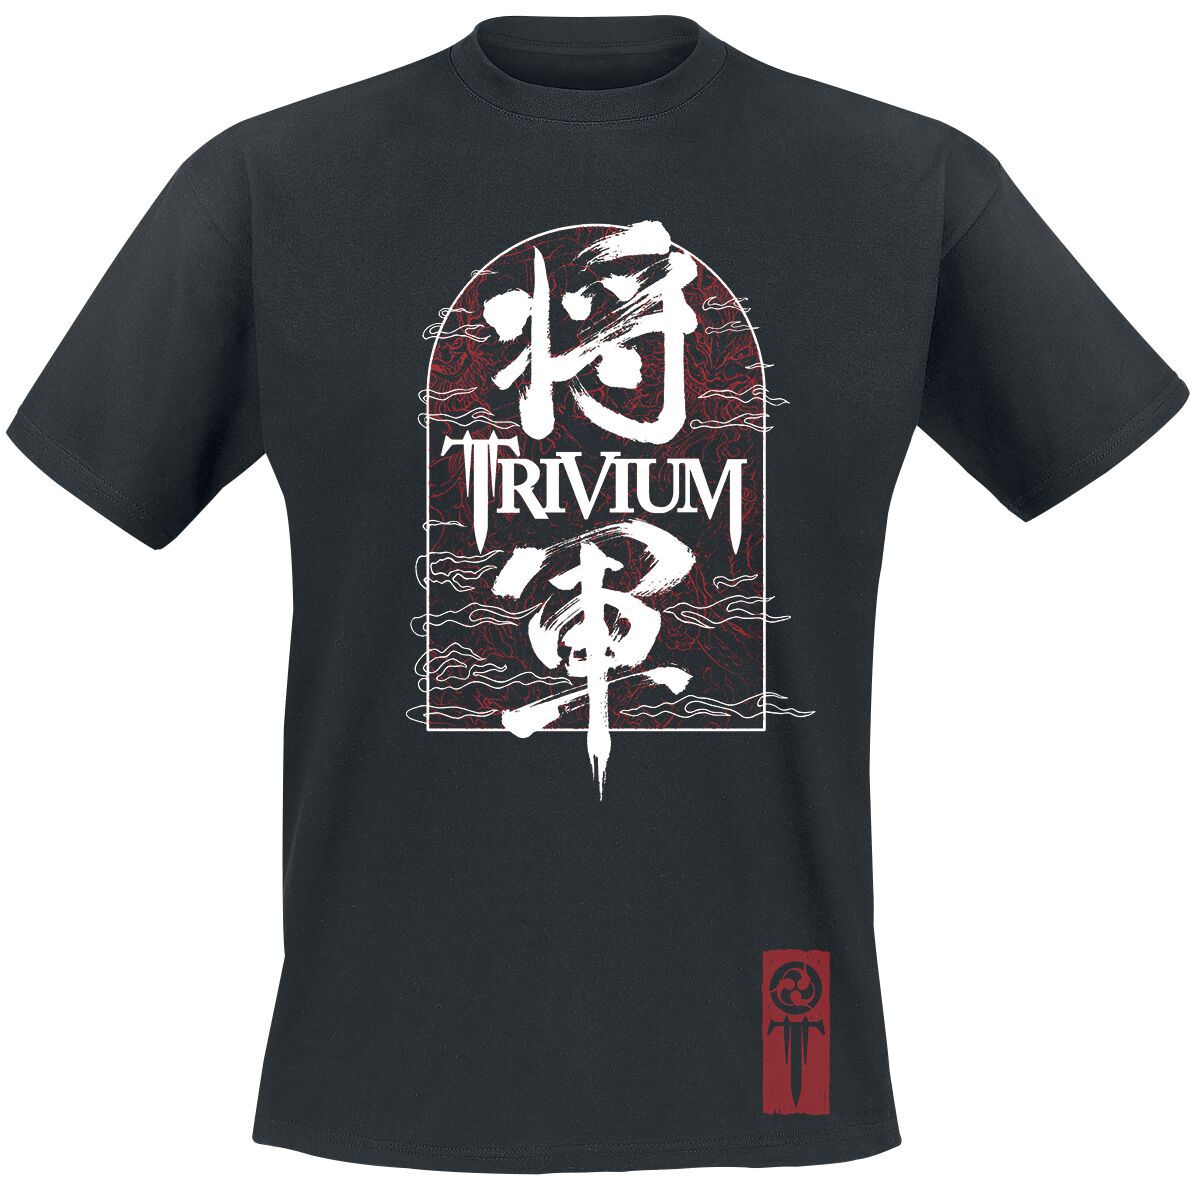 Trivium Shogun Remix T-Shirt black